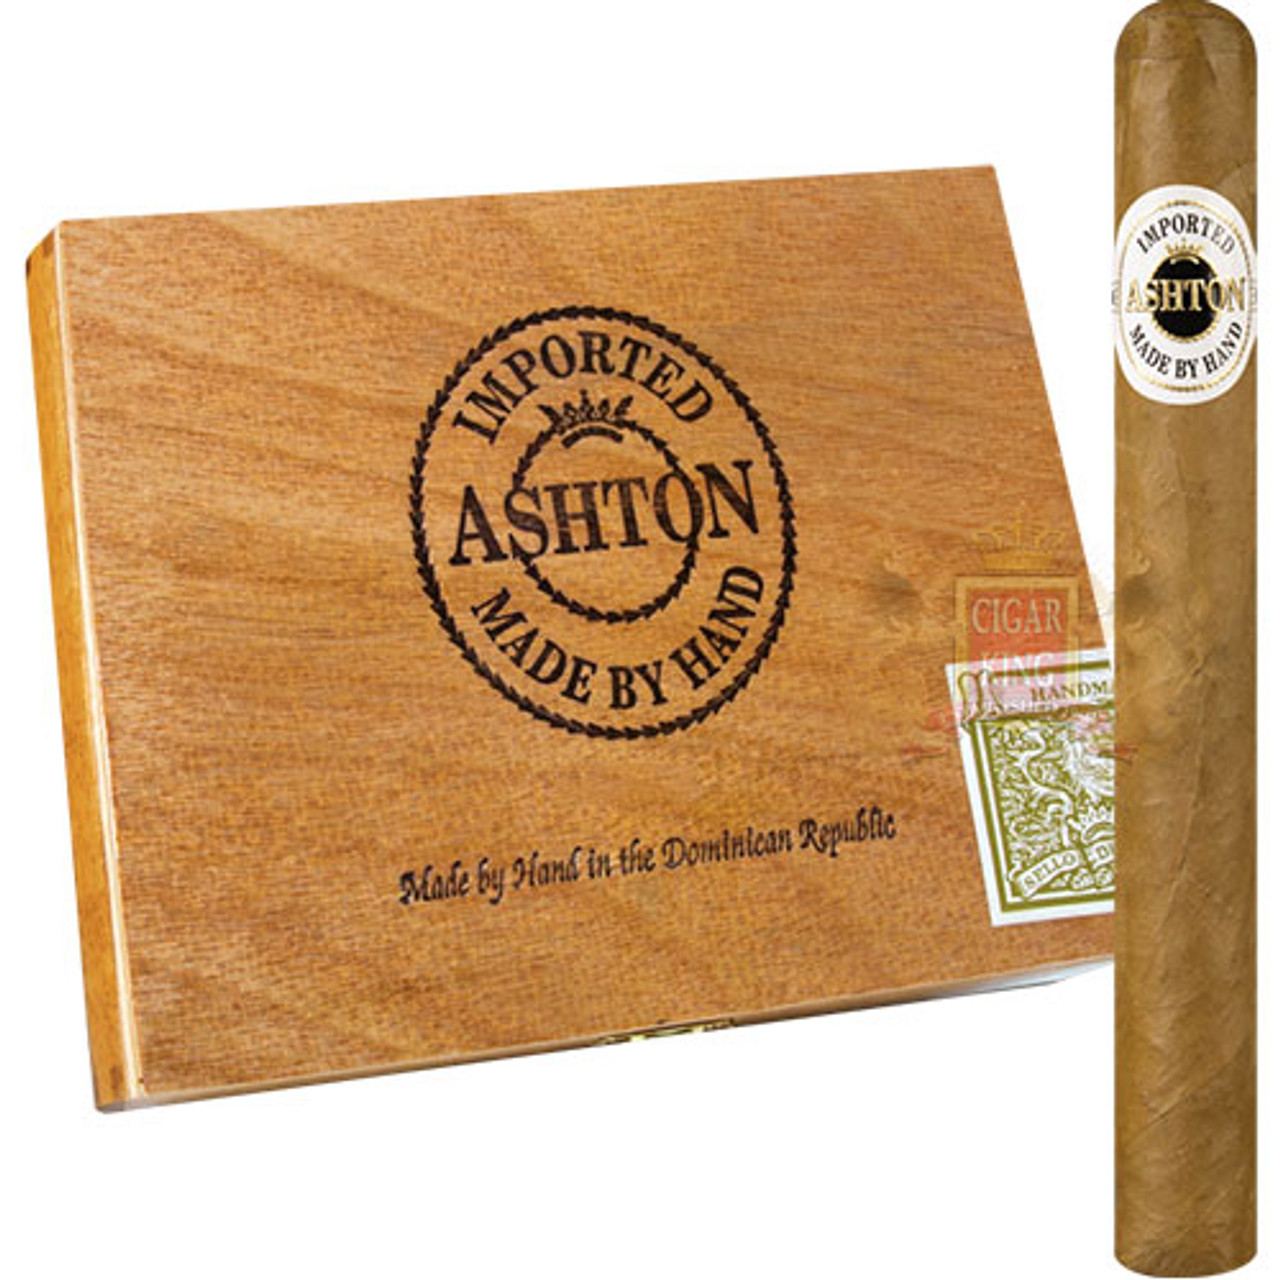 Ashton Churchill cigars at Discount prices